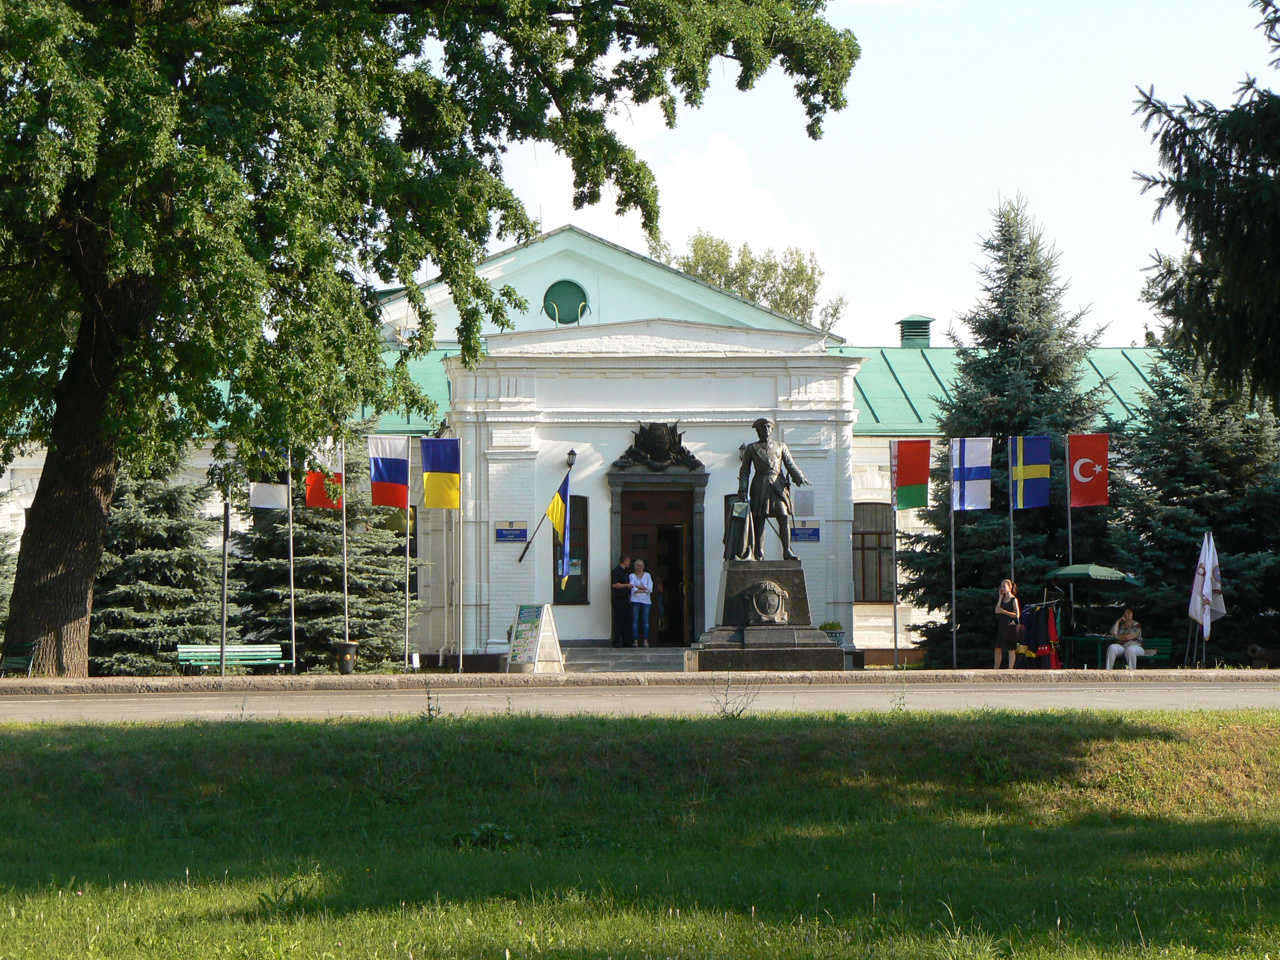 Poltava City